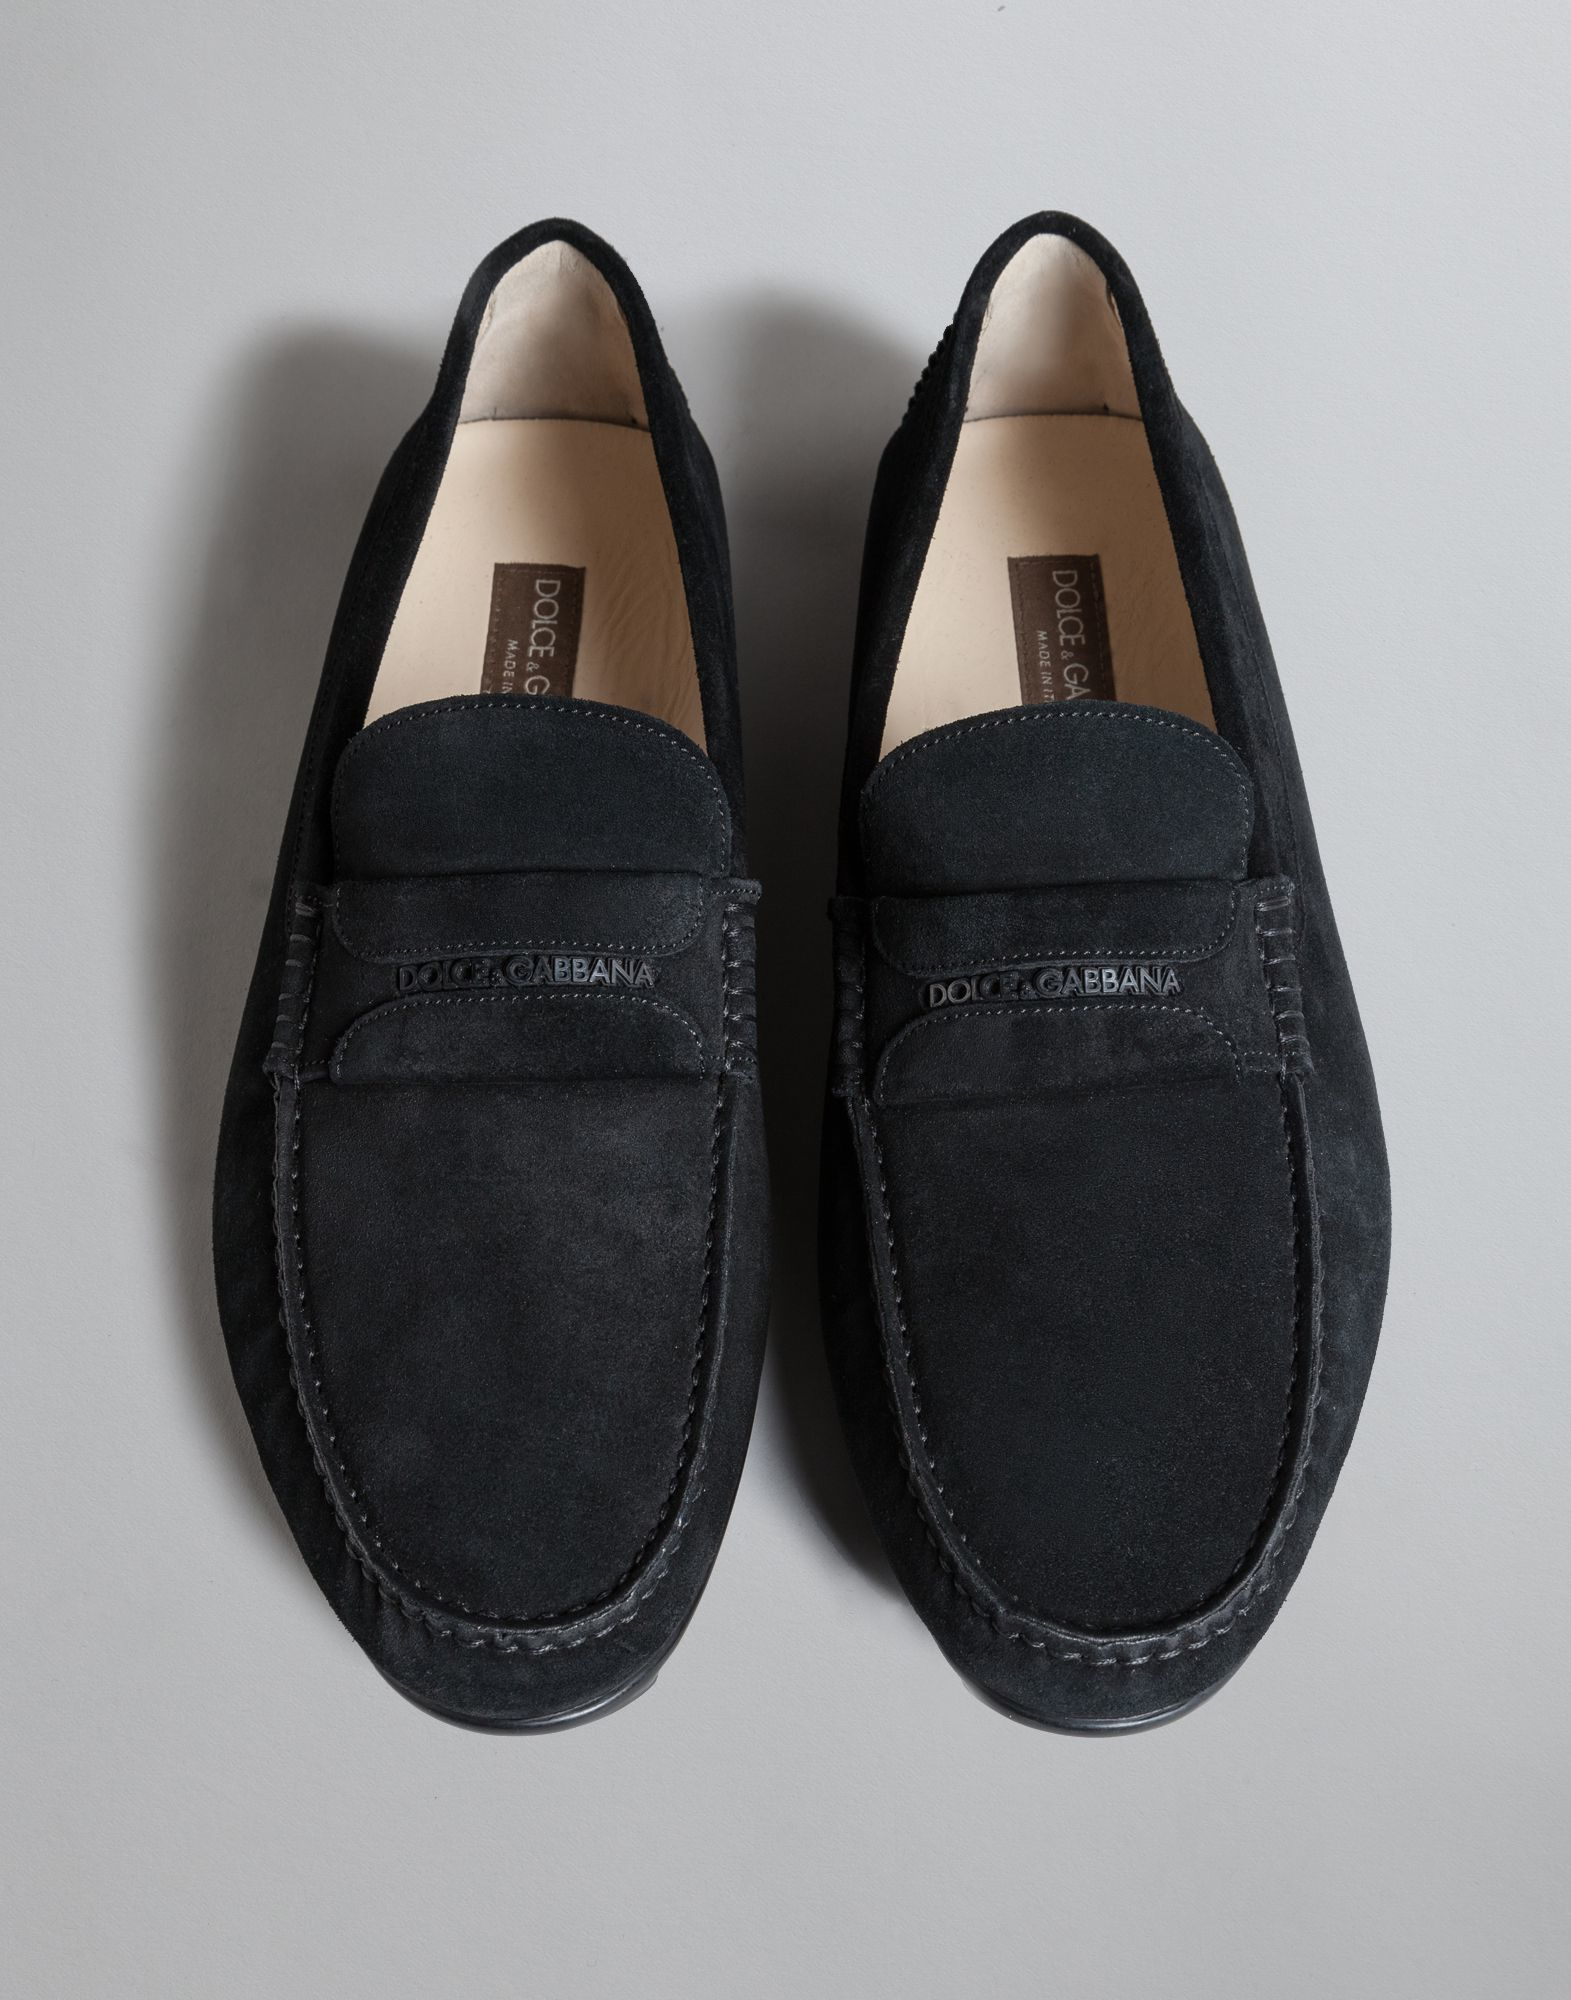 Lyst - Dolce & Gabbana Suede Calfskin Driving Shoe in Black for Men